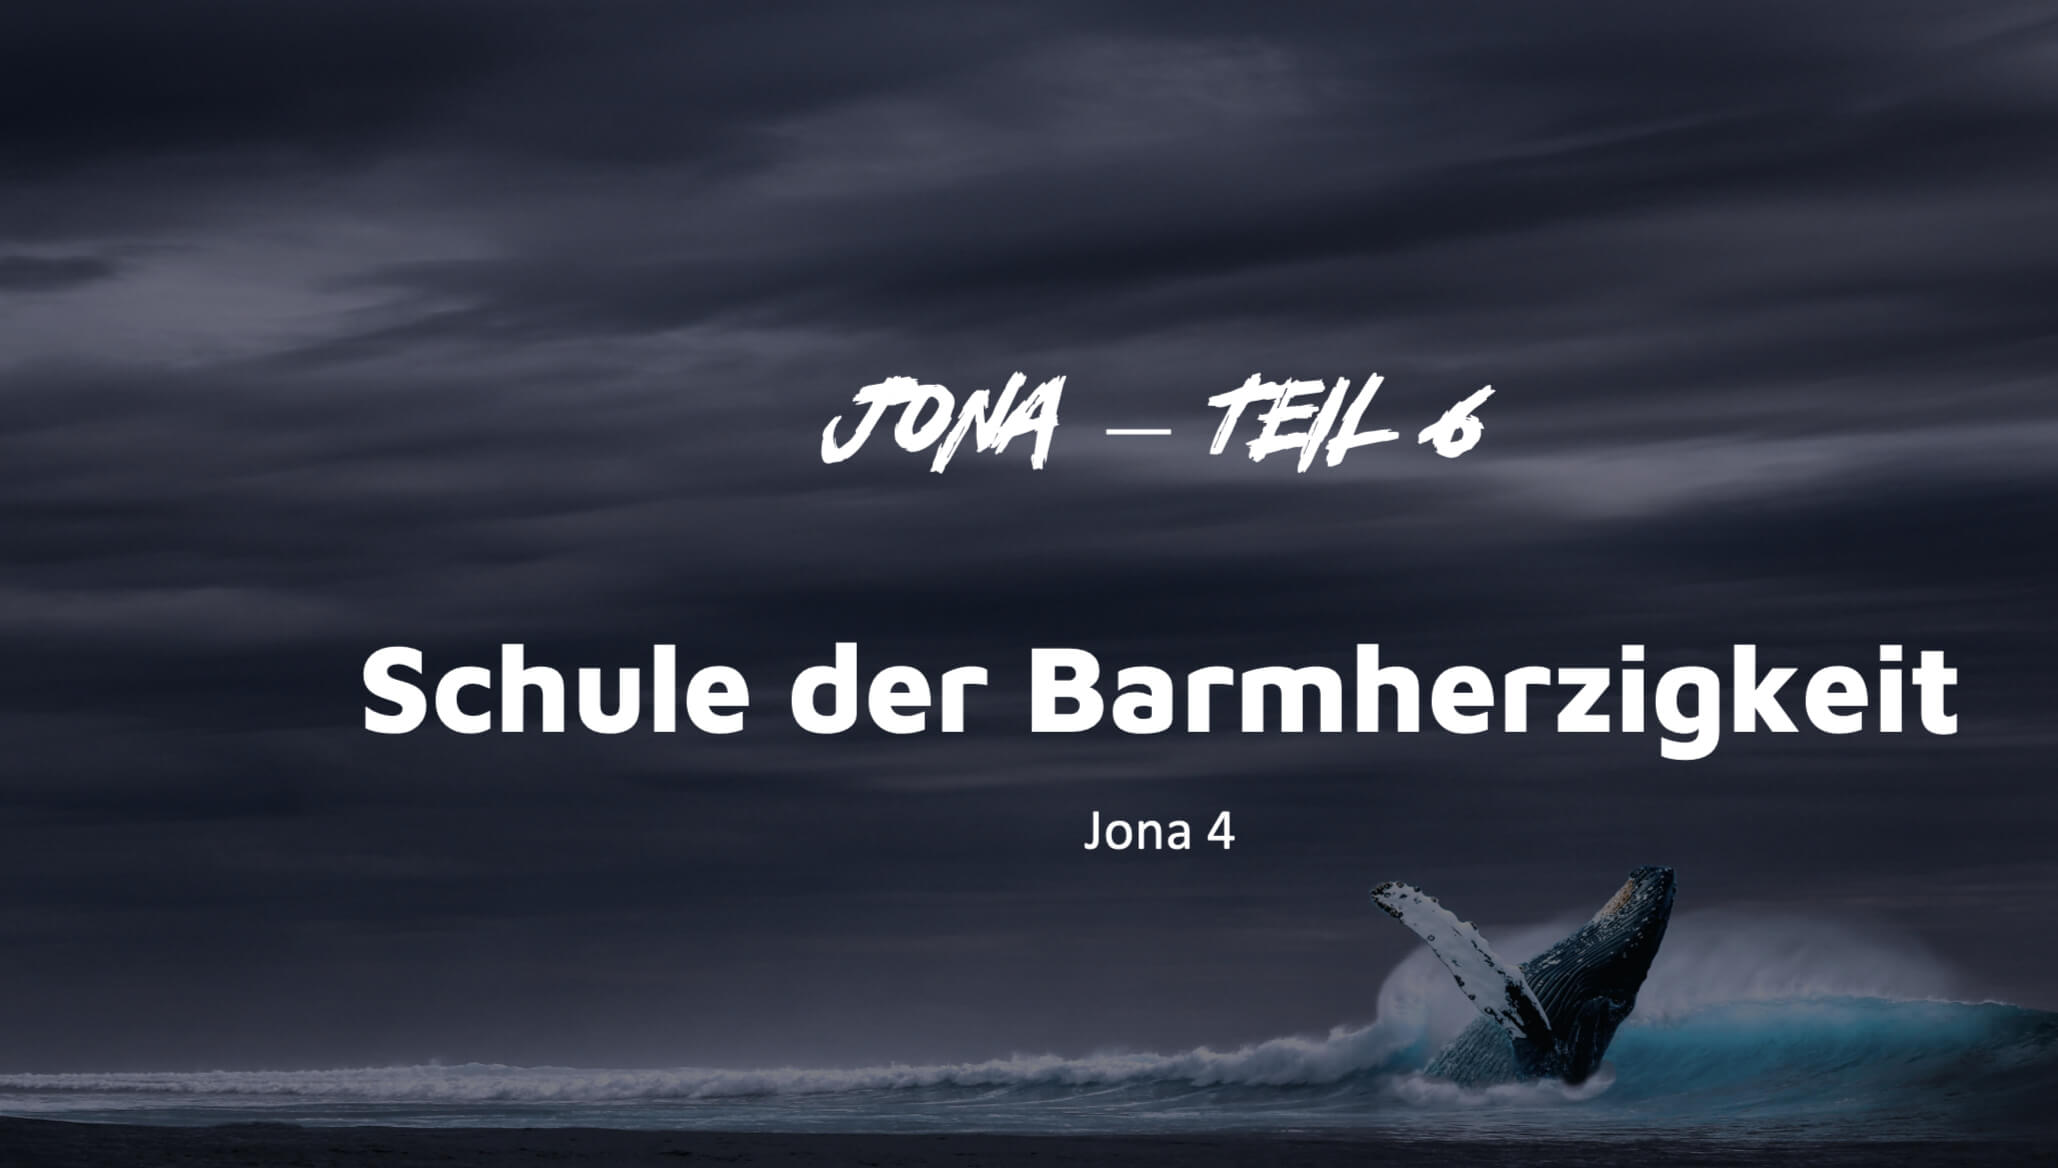 Jona – Teil 6